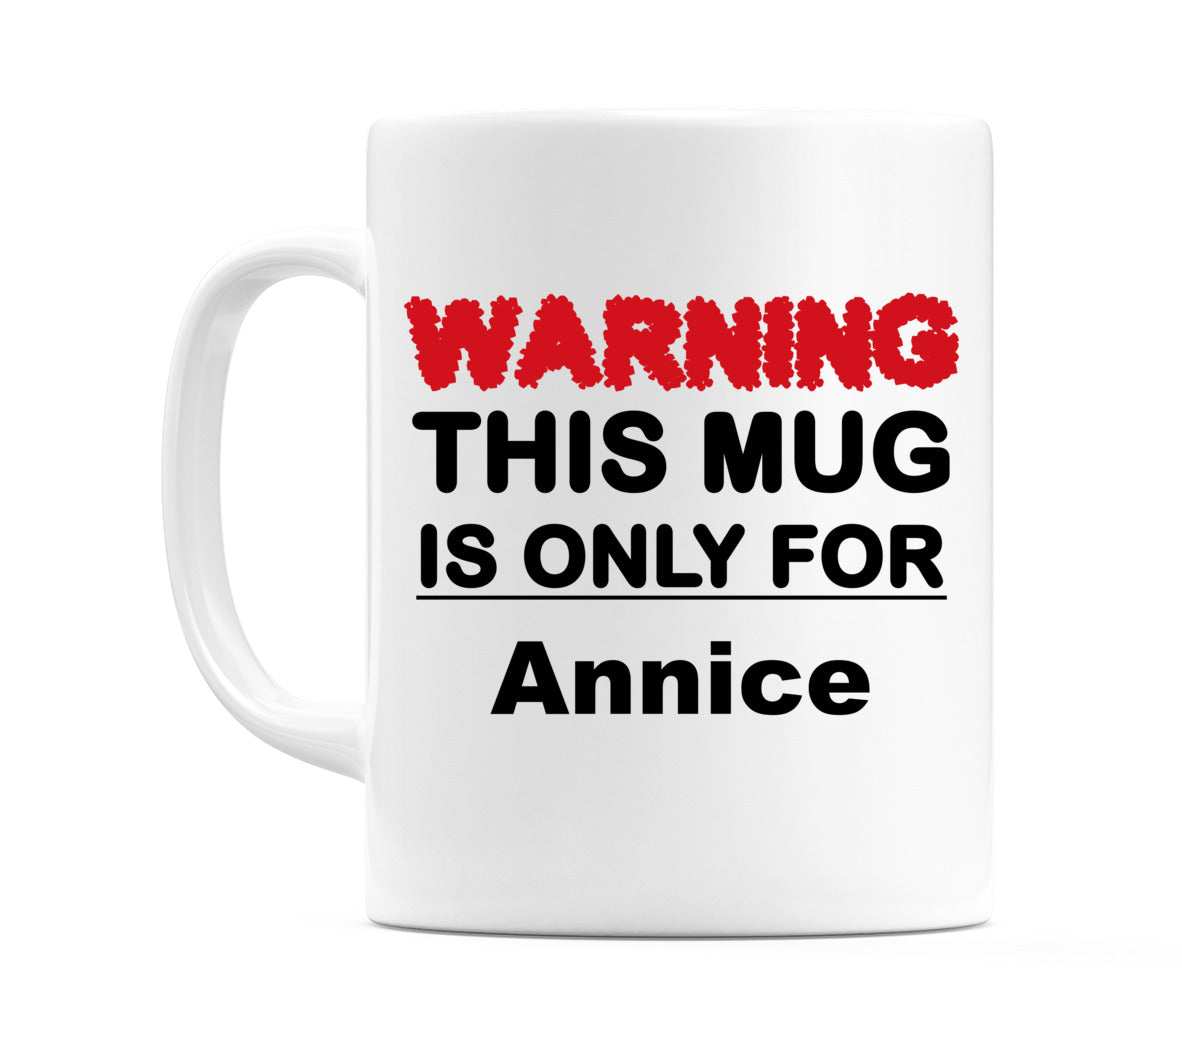 Warning This Mug is ONLY for Annice Mug